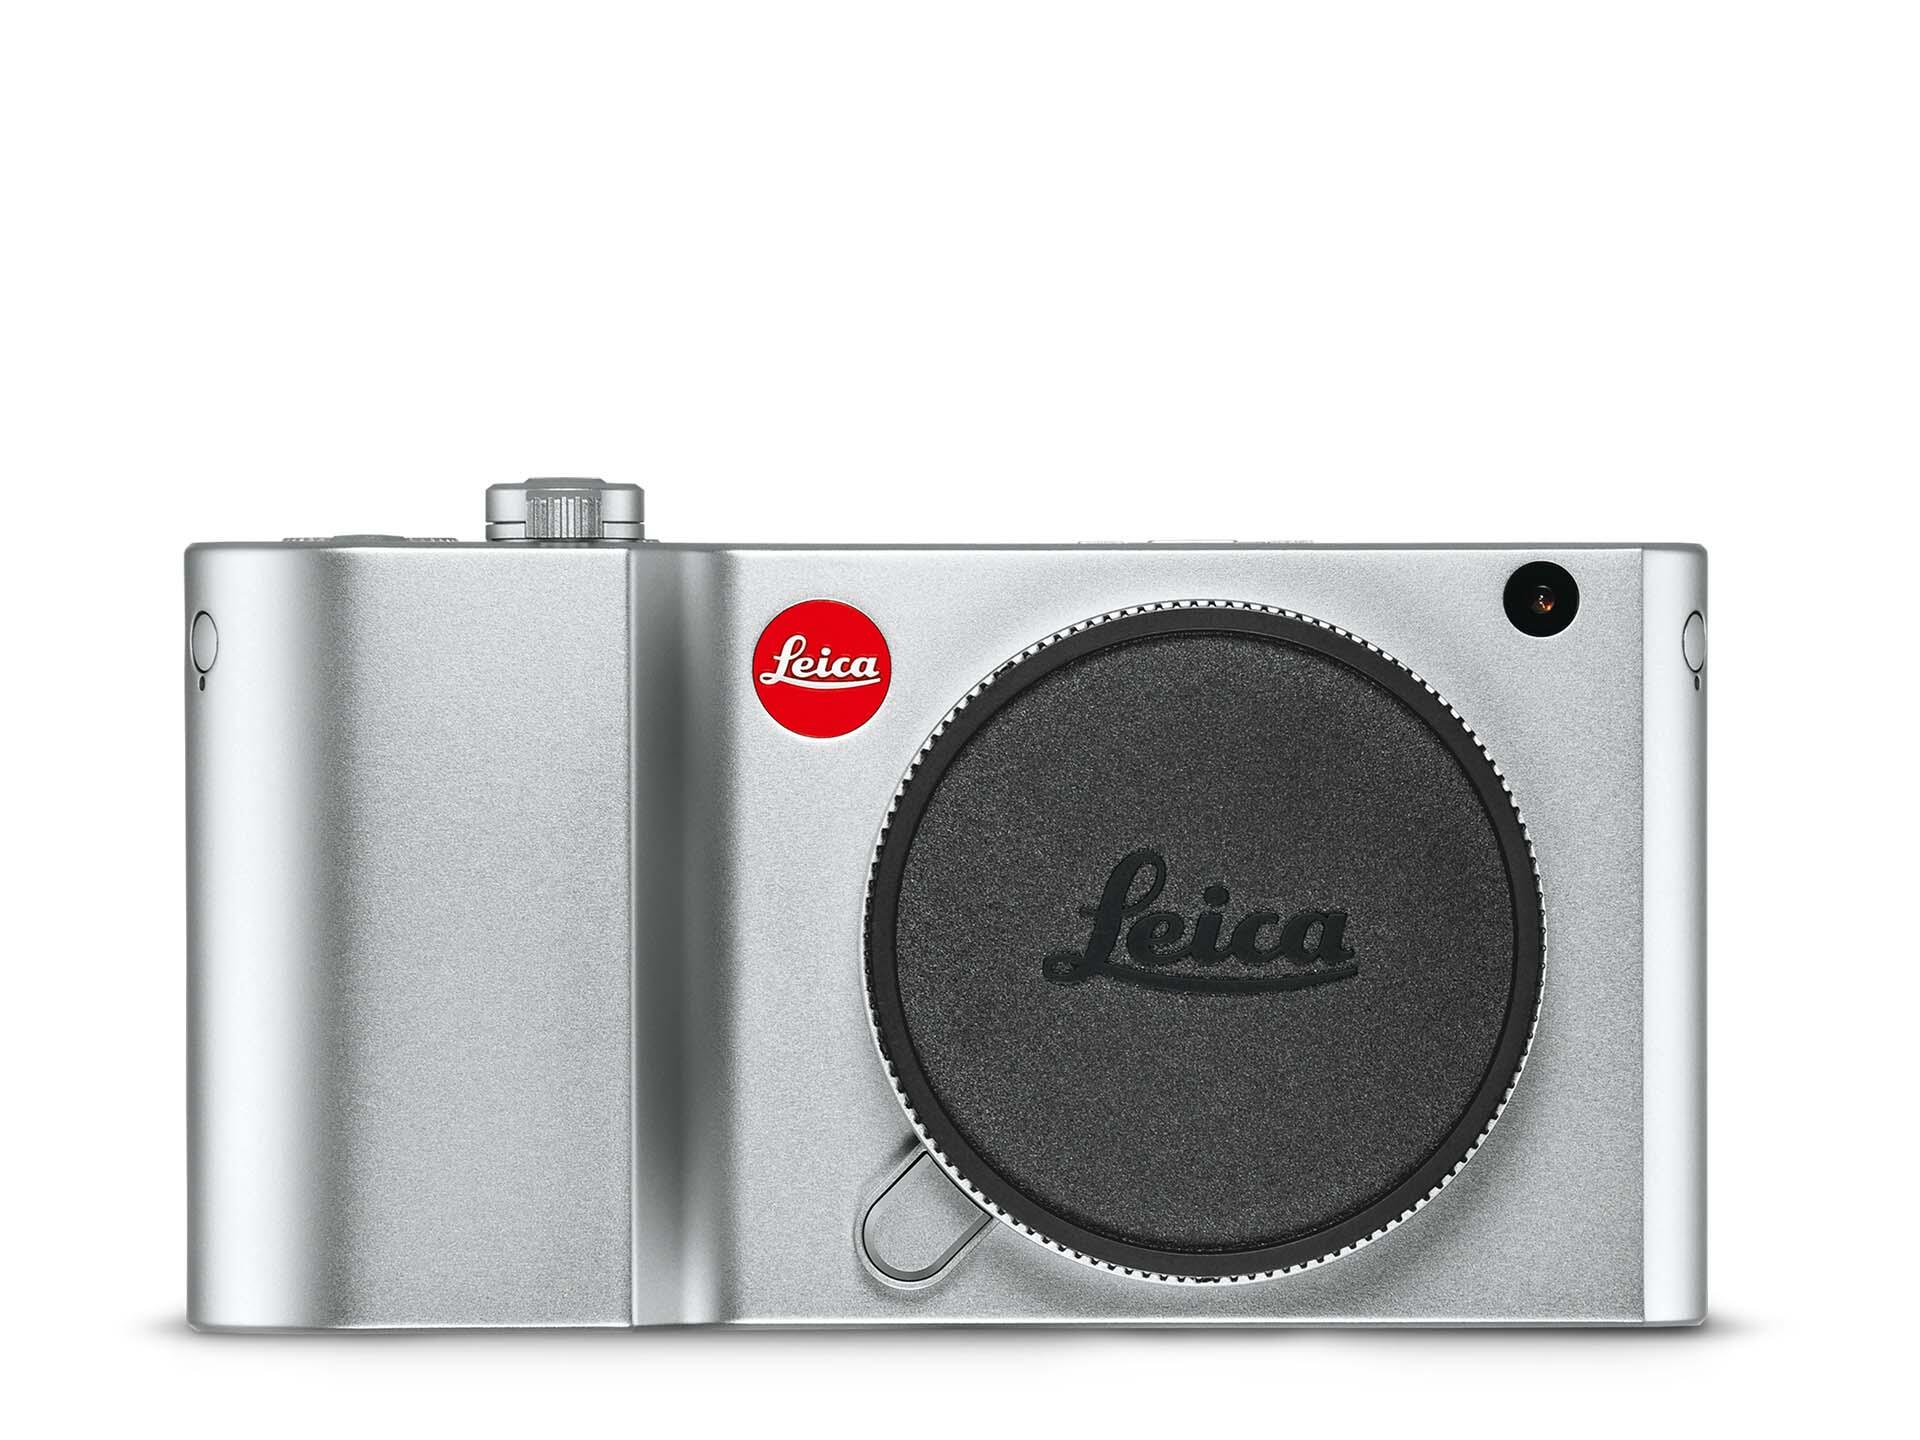 Leica TL2 | Leica Camera AG